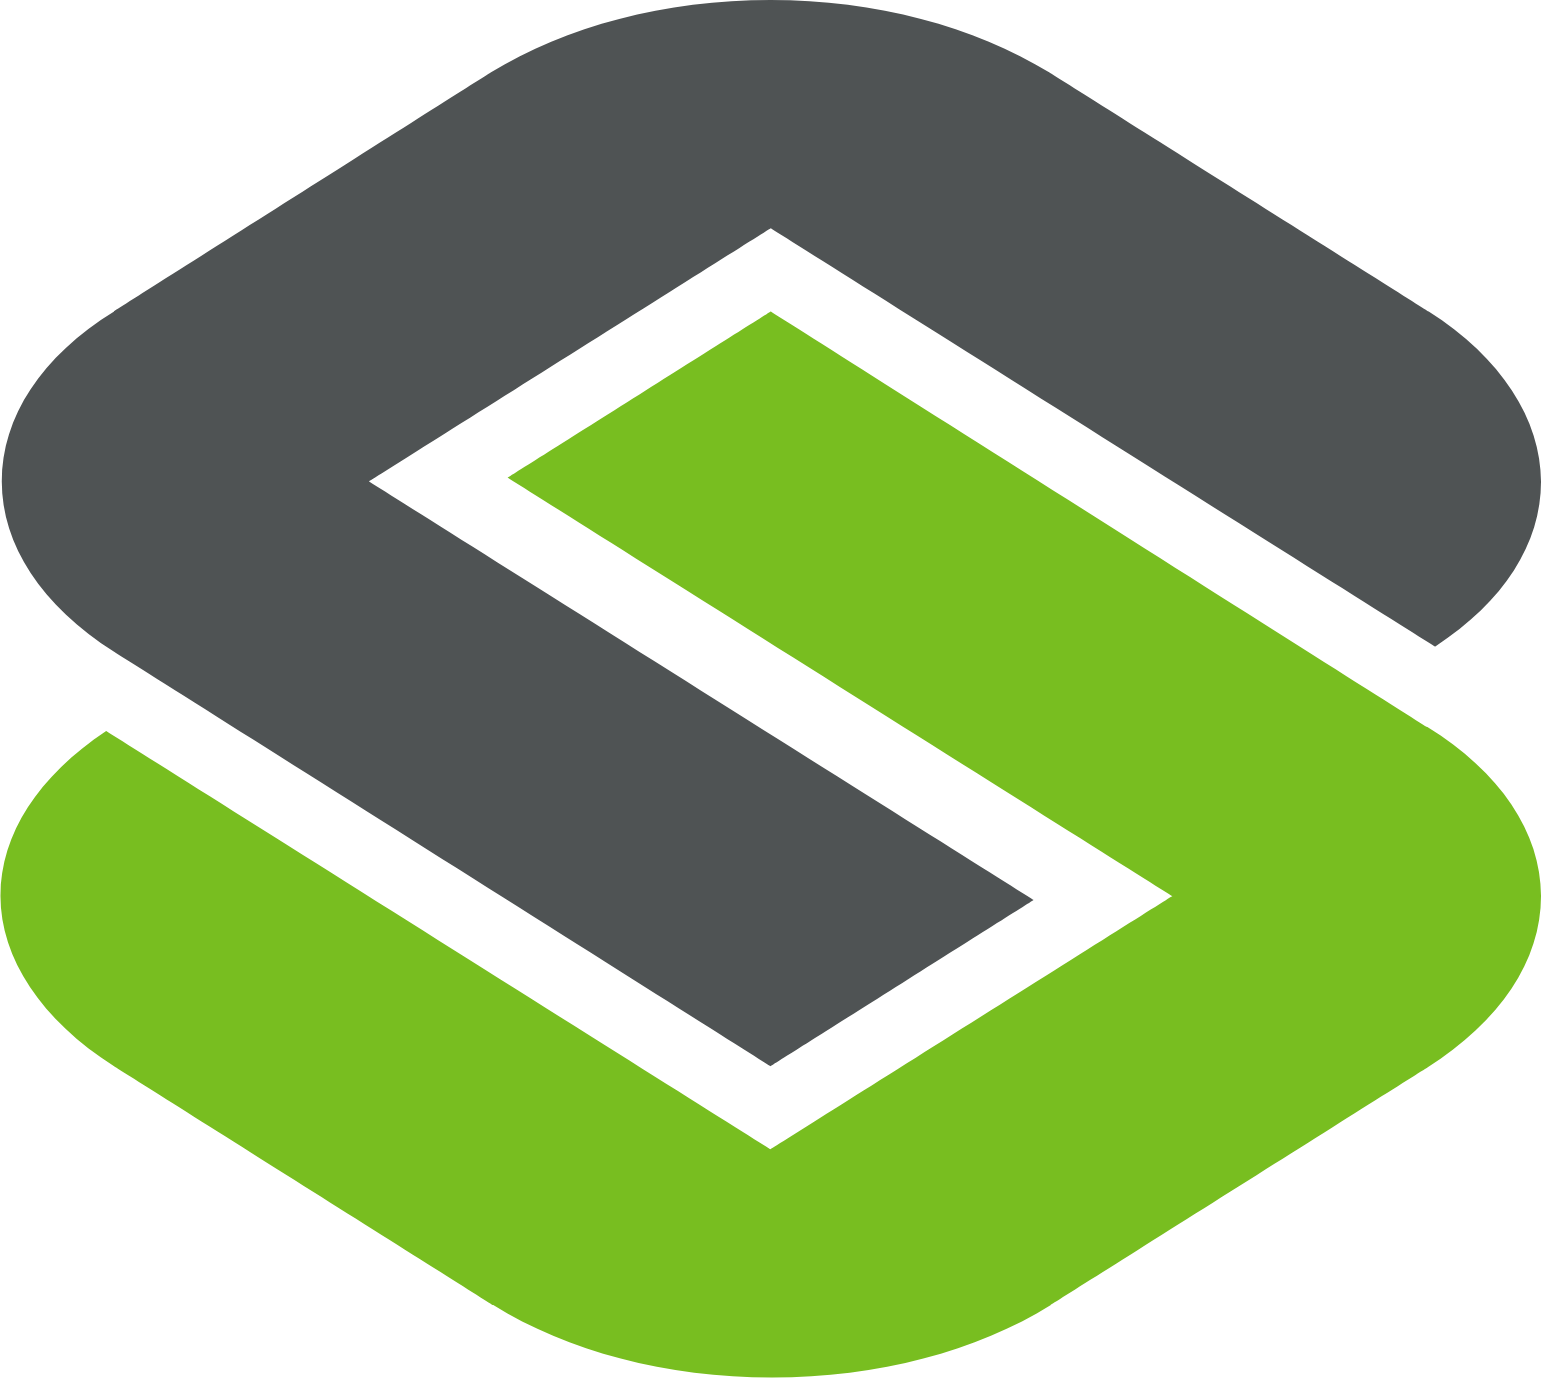 Symbotic logo (transparent PNG)